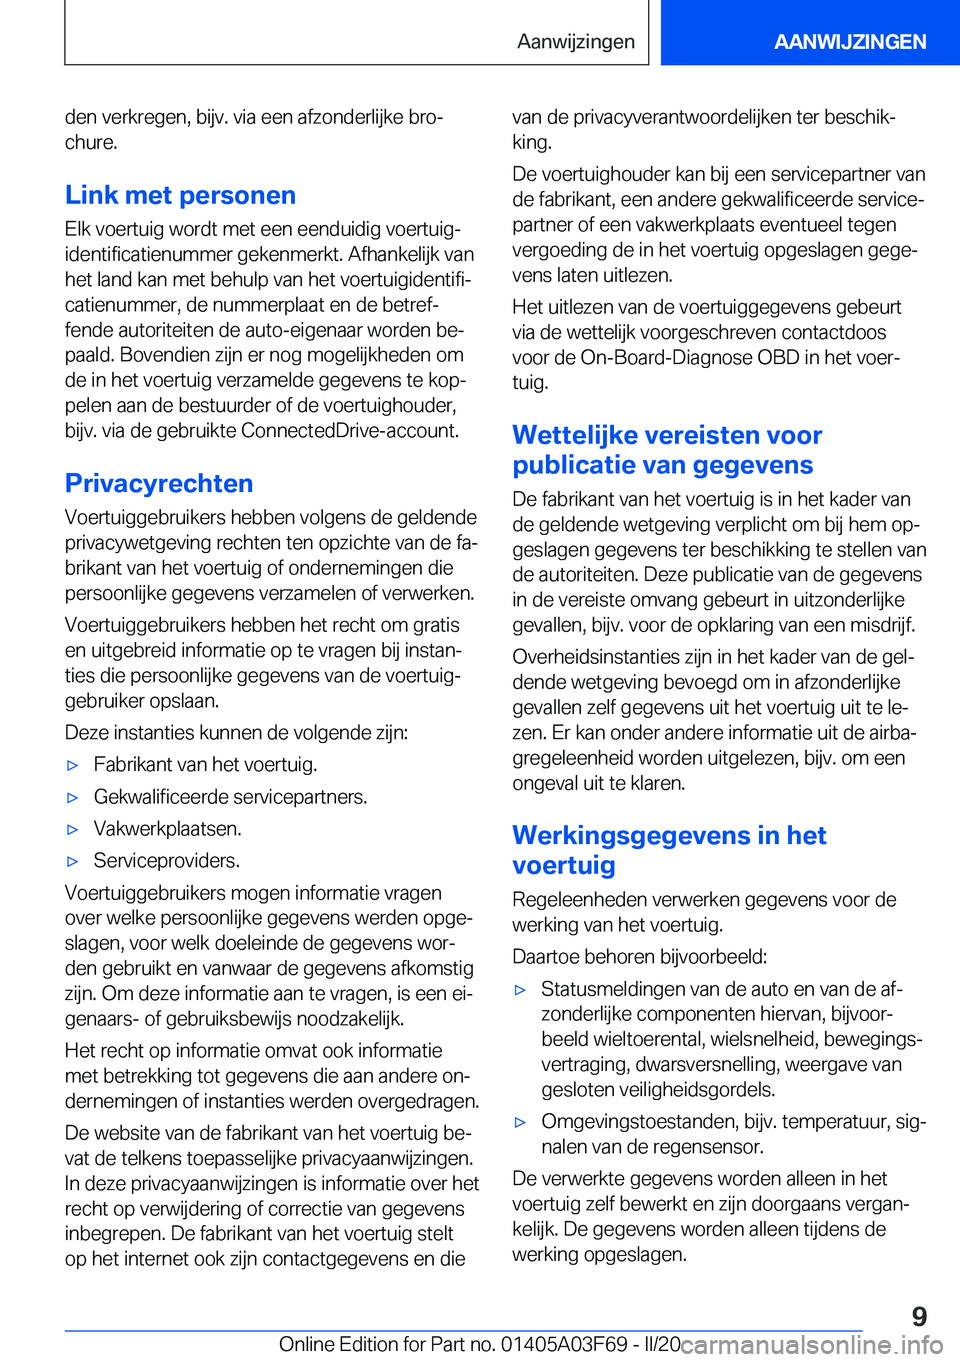 BMW 3 SERIES 2020  Instructieboekjes (in Dutch) �d�e�n��v�e�r�k�r�e�g�e�n�,��b�i�j�v�.��v�i�a��e�e�n��a�f�z�o�n�d�e�r�l�i�j�k�e��b�r�oj
�c�h�u�r�e�.
�L�i�n�k��m�e�t��p�e�r�s�o�n�e�n�E�l�k��v�o�e�r�t�u�i�g��w�o�r�d�t��m�e�t��e�e�n��e�e